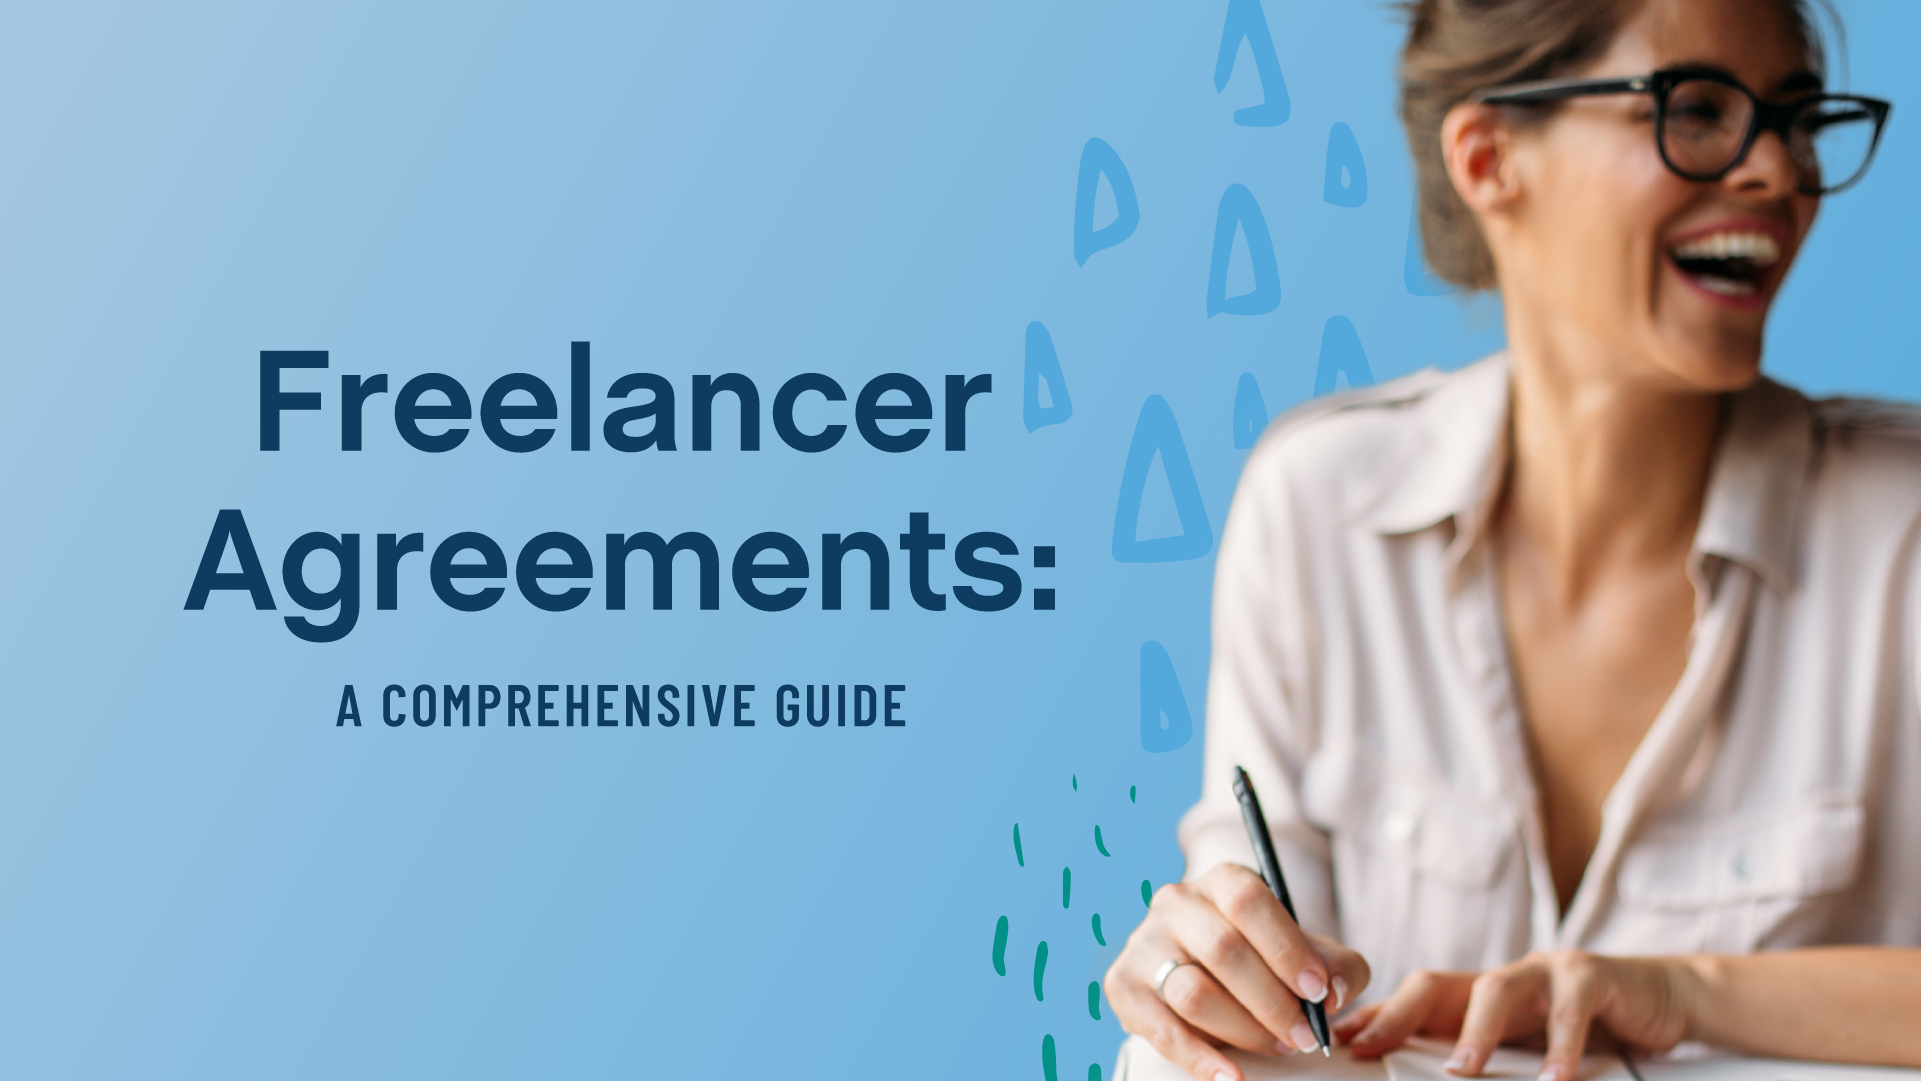 Freelancer Agreements: A Comprehensive Guide